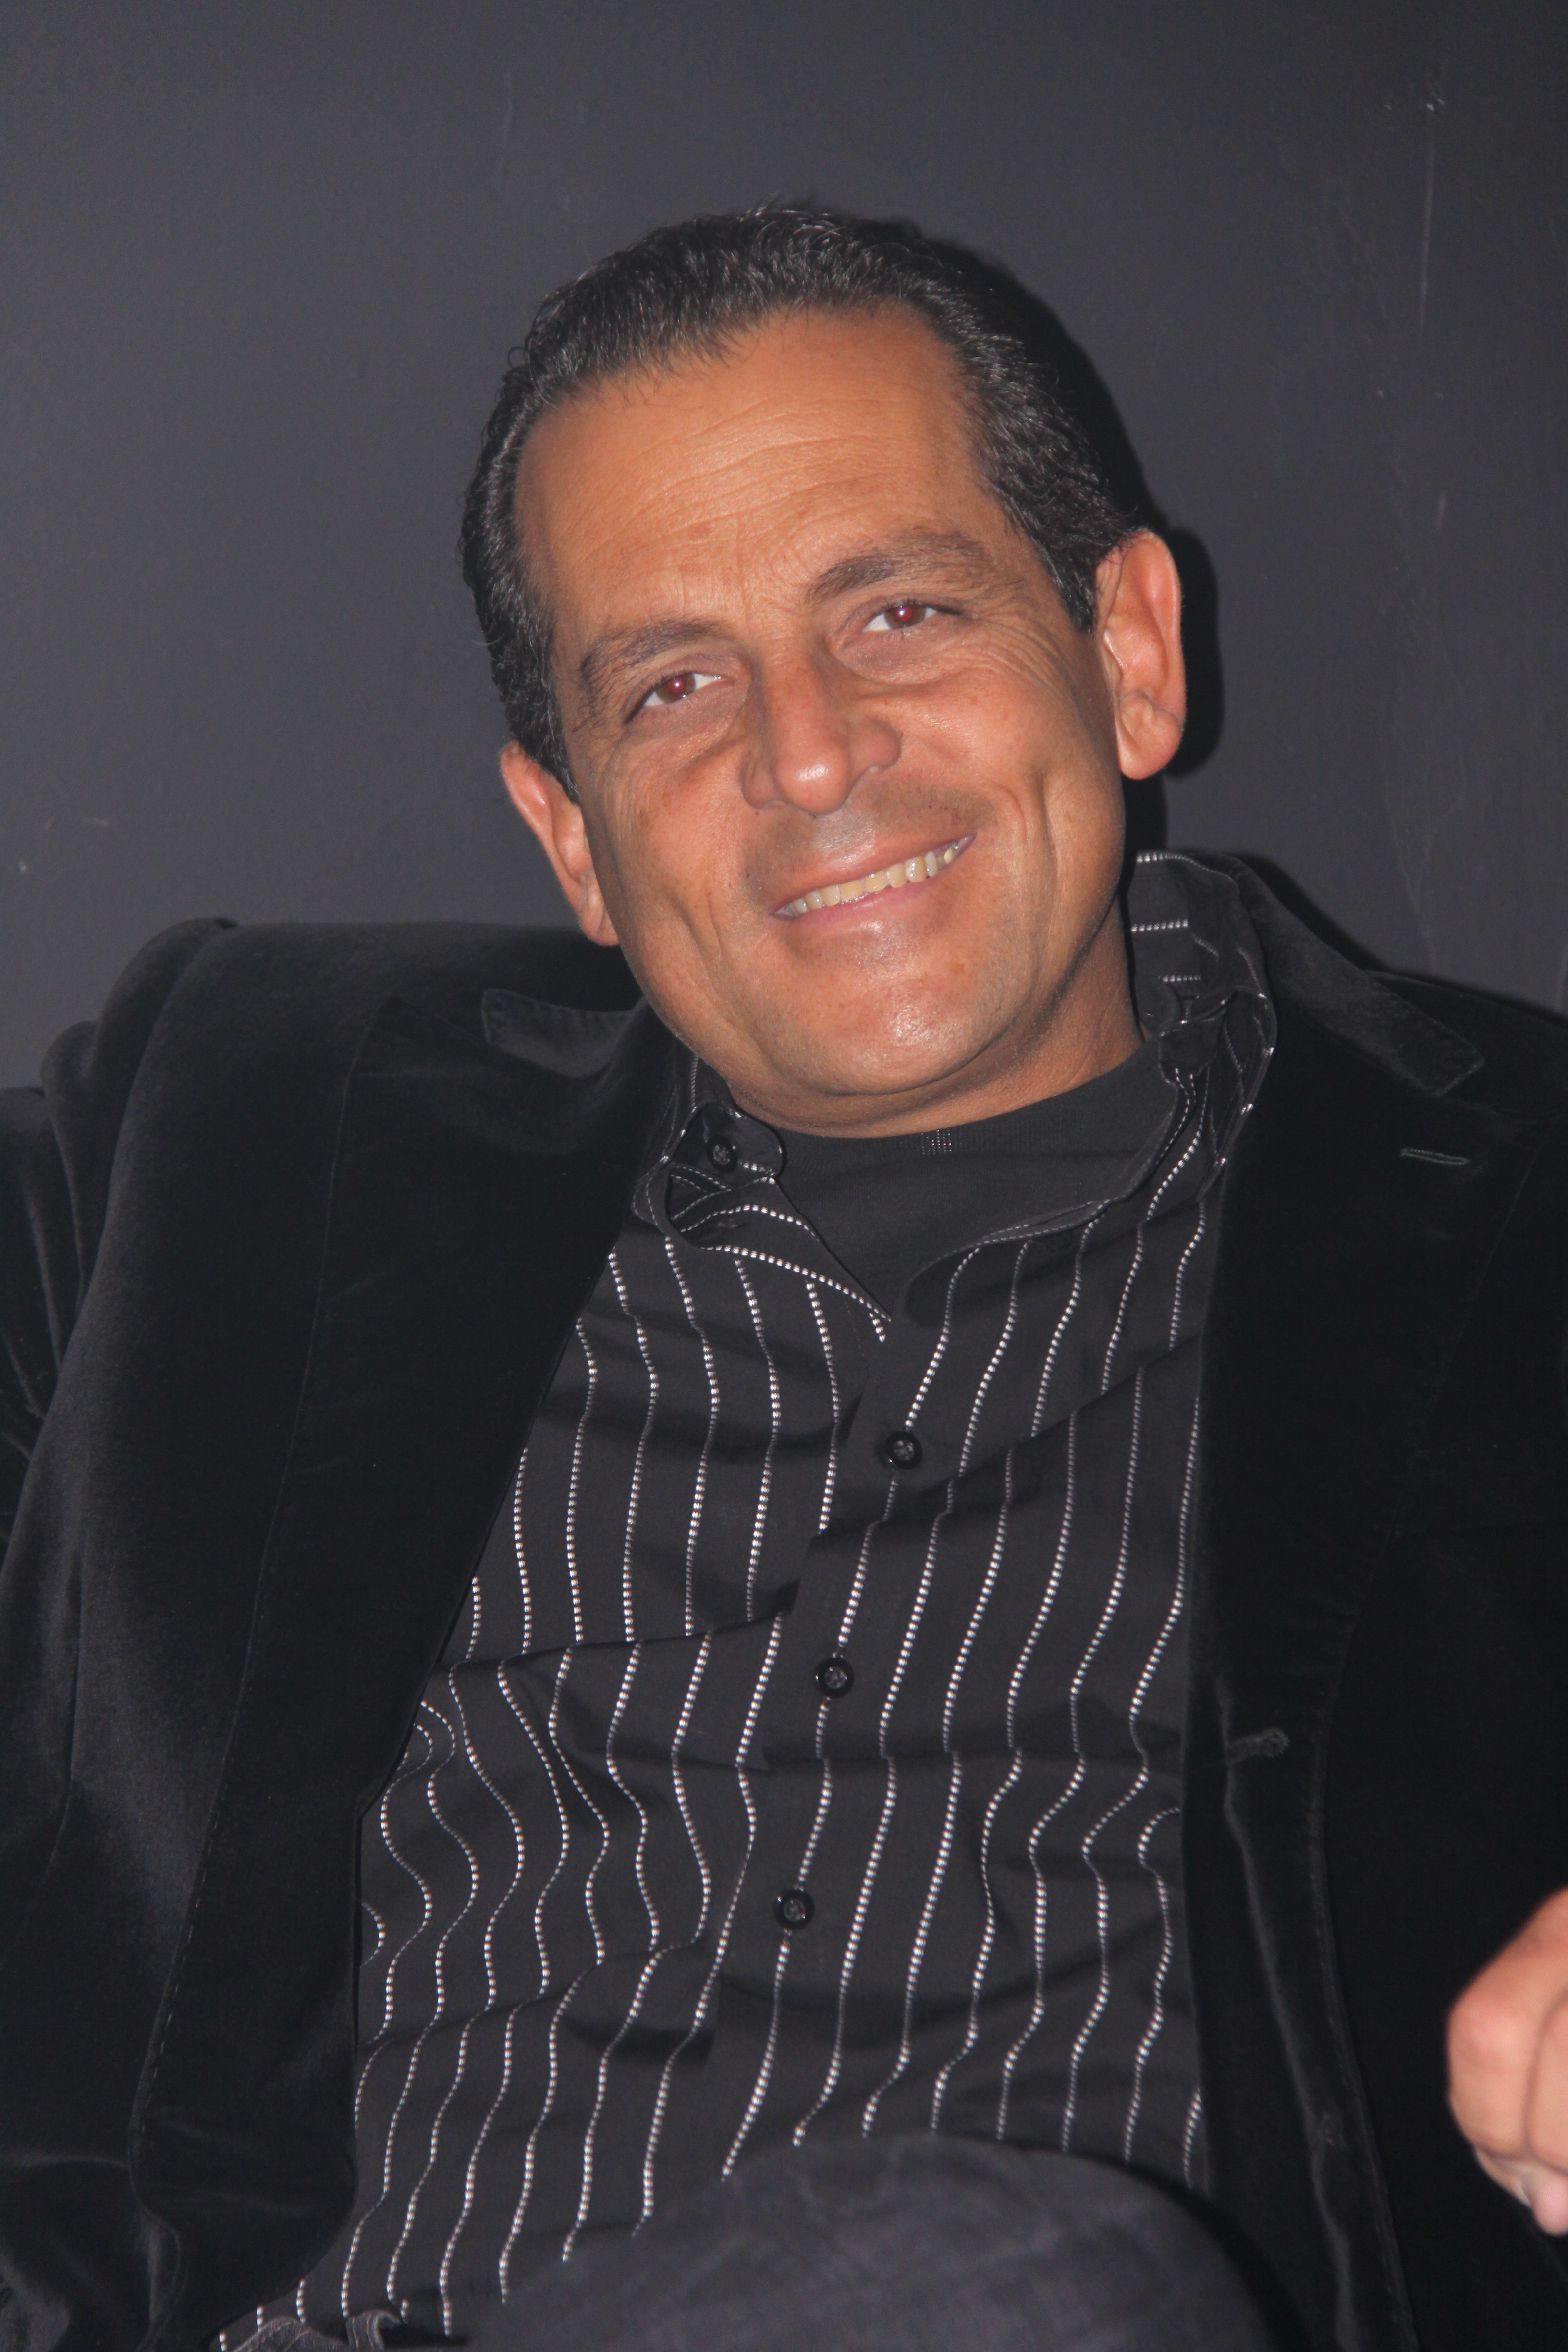 Michael Pecina